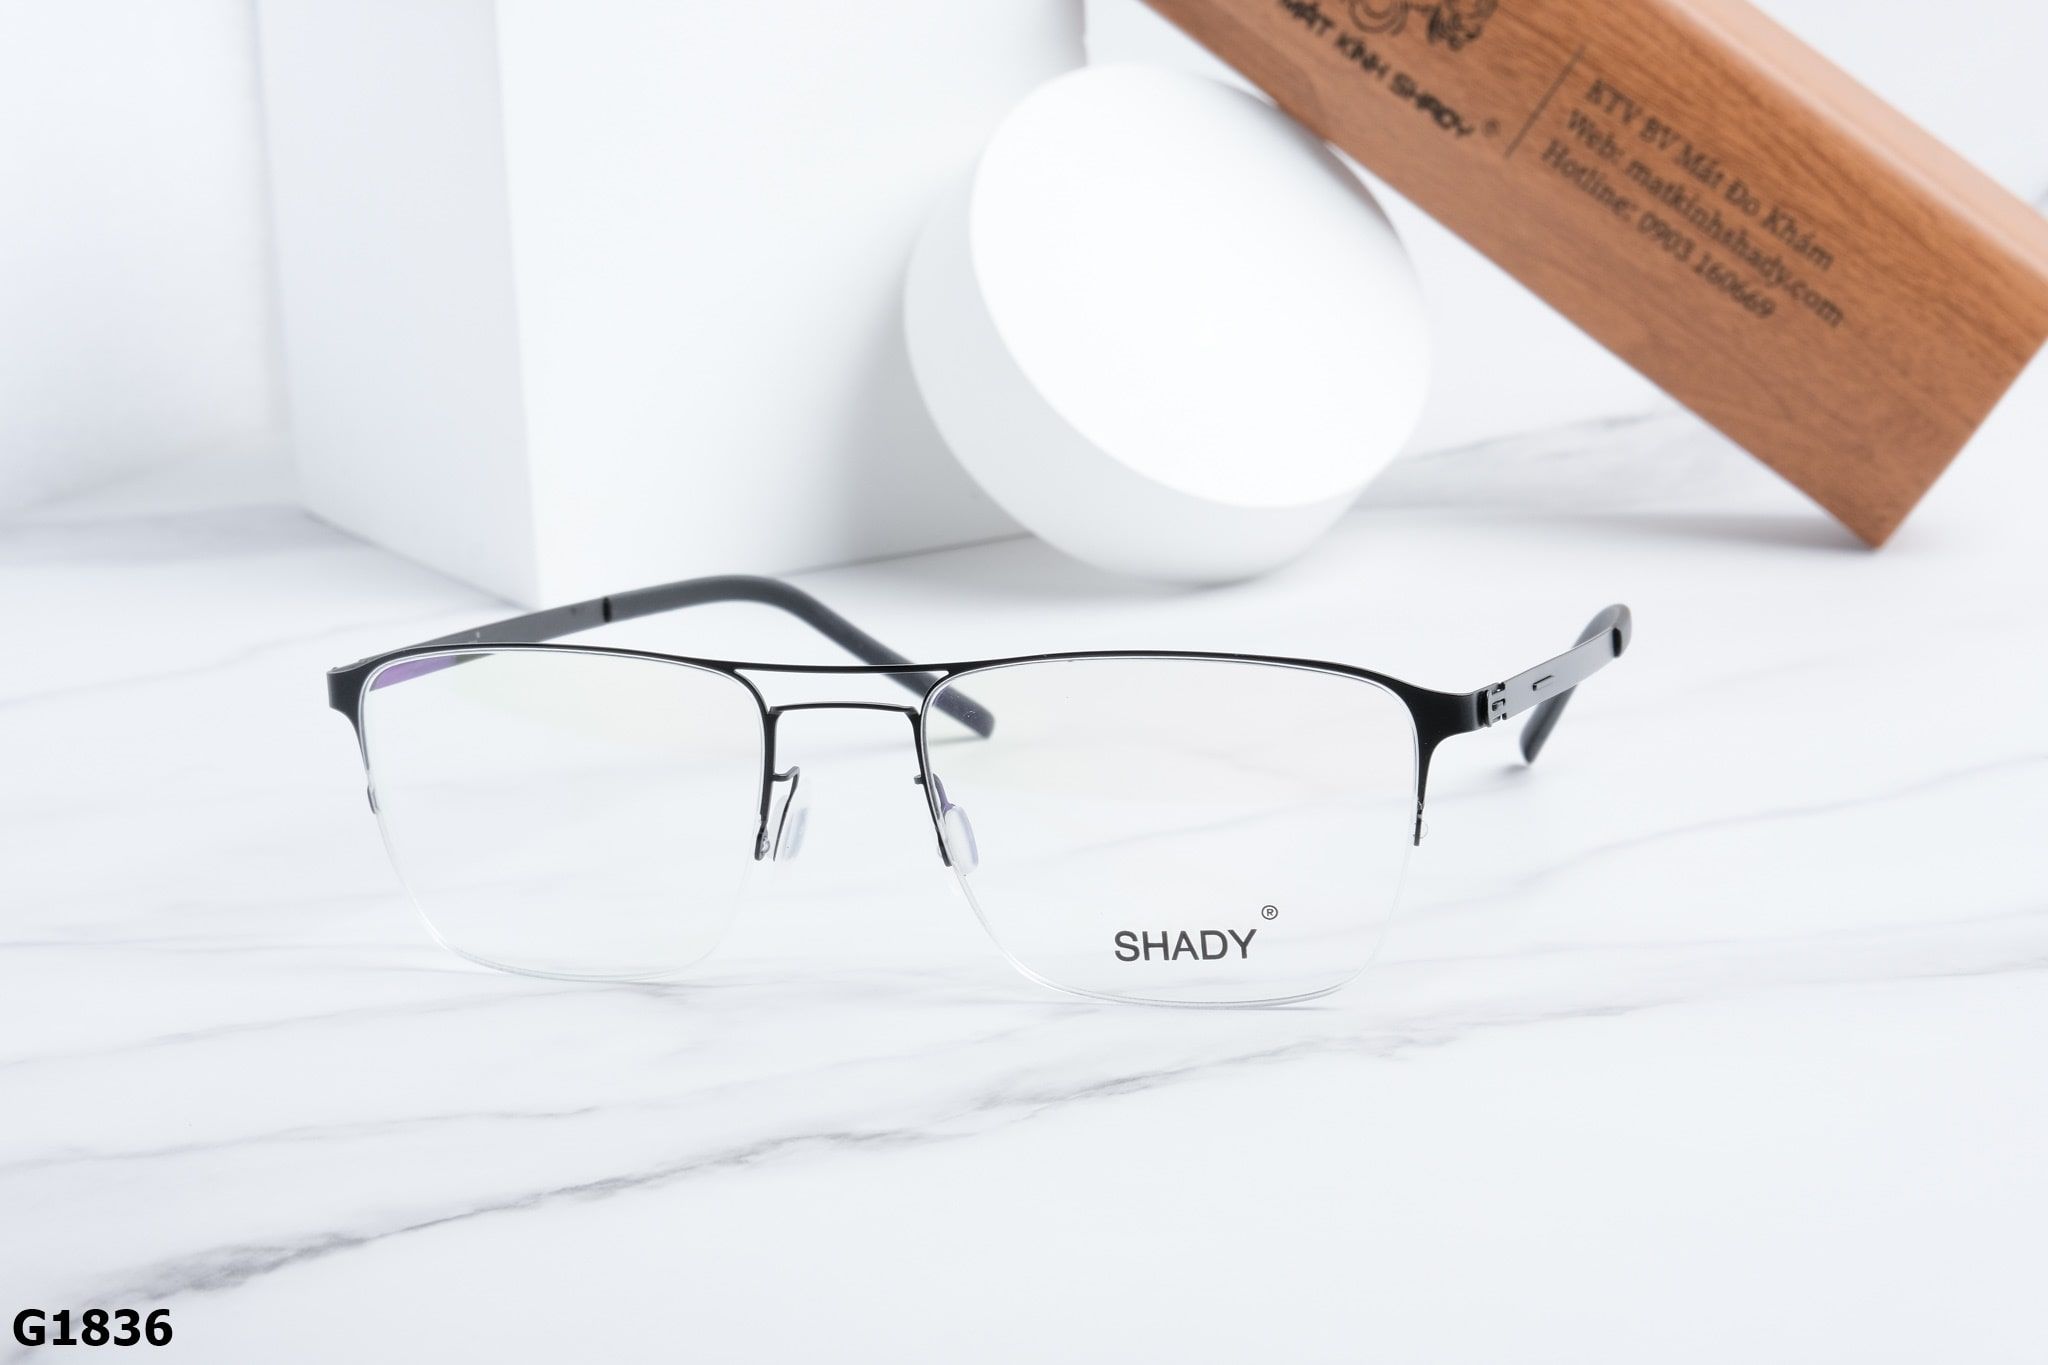  SHADY Eyewear - Glasses - G1836 